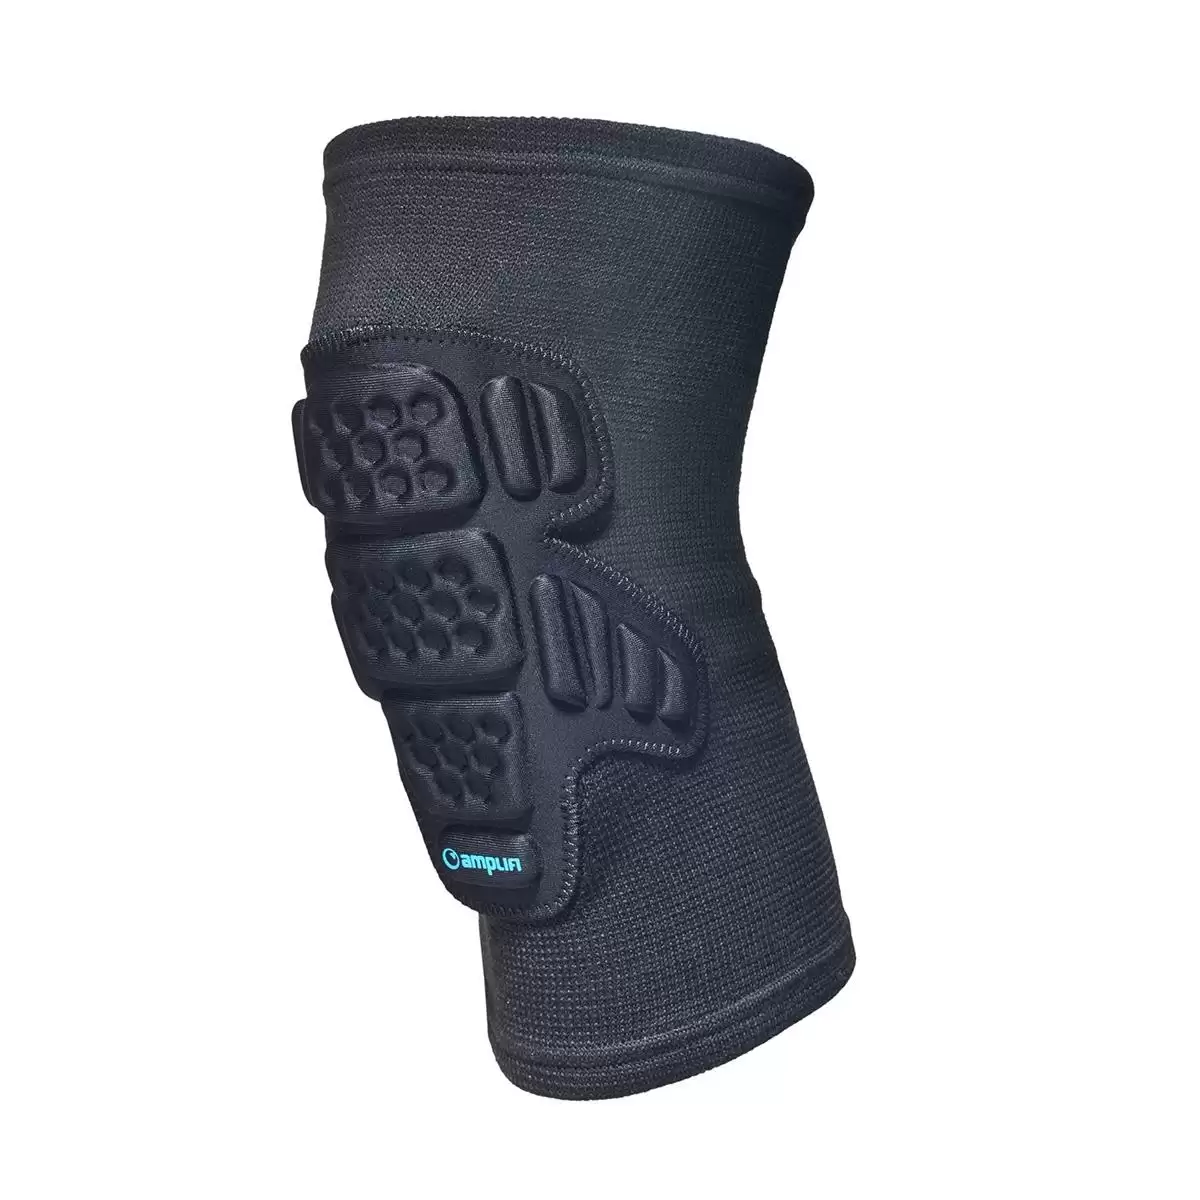 Sleeve 3D Knee guards Black Size XL - image